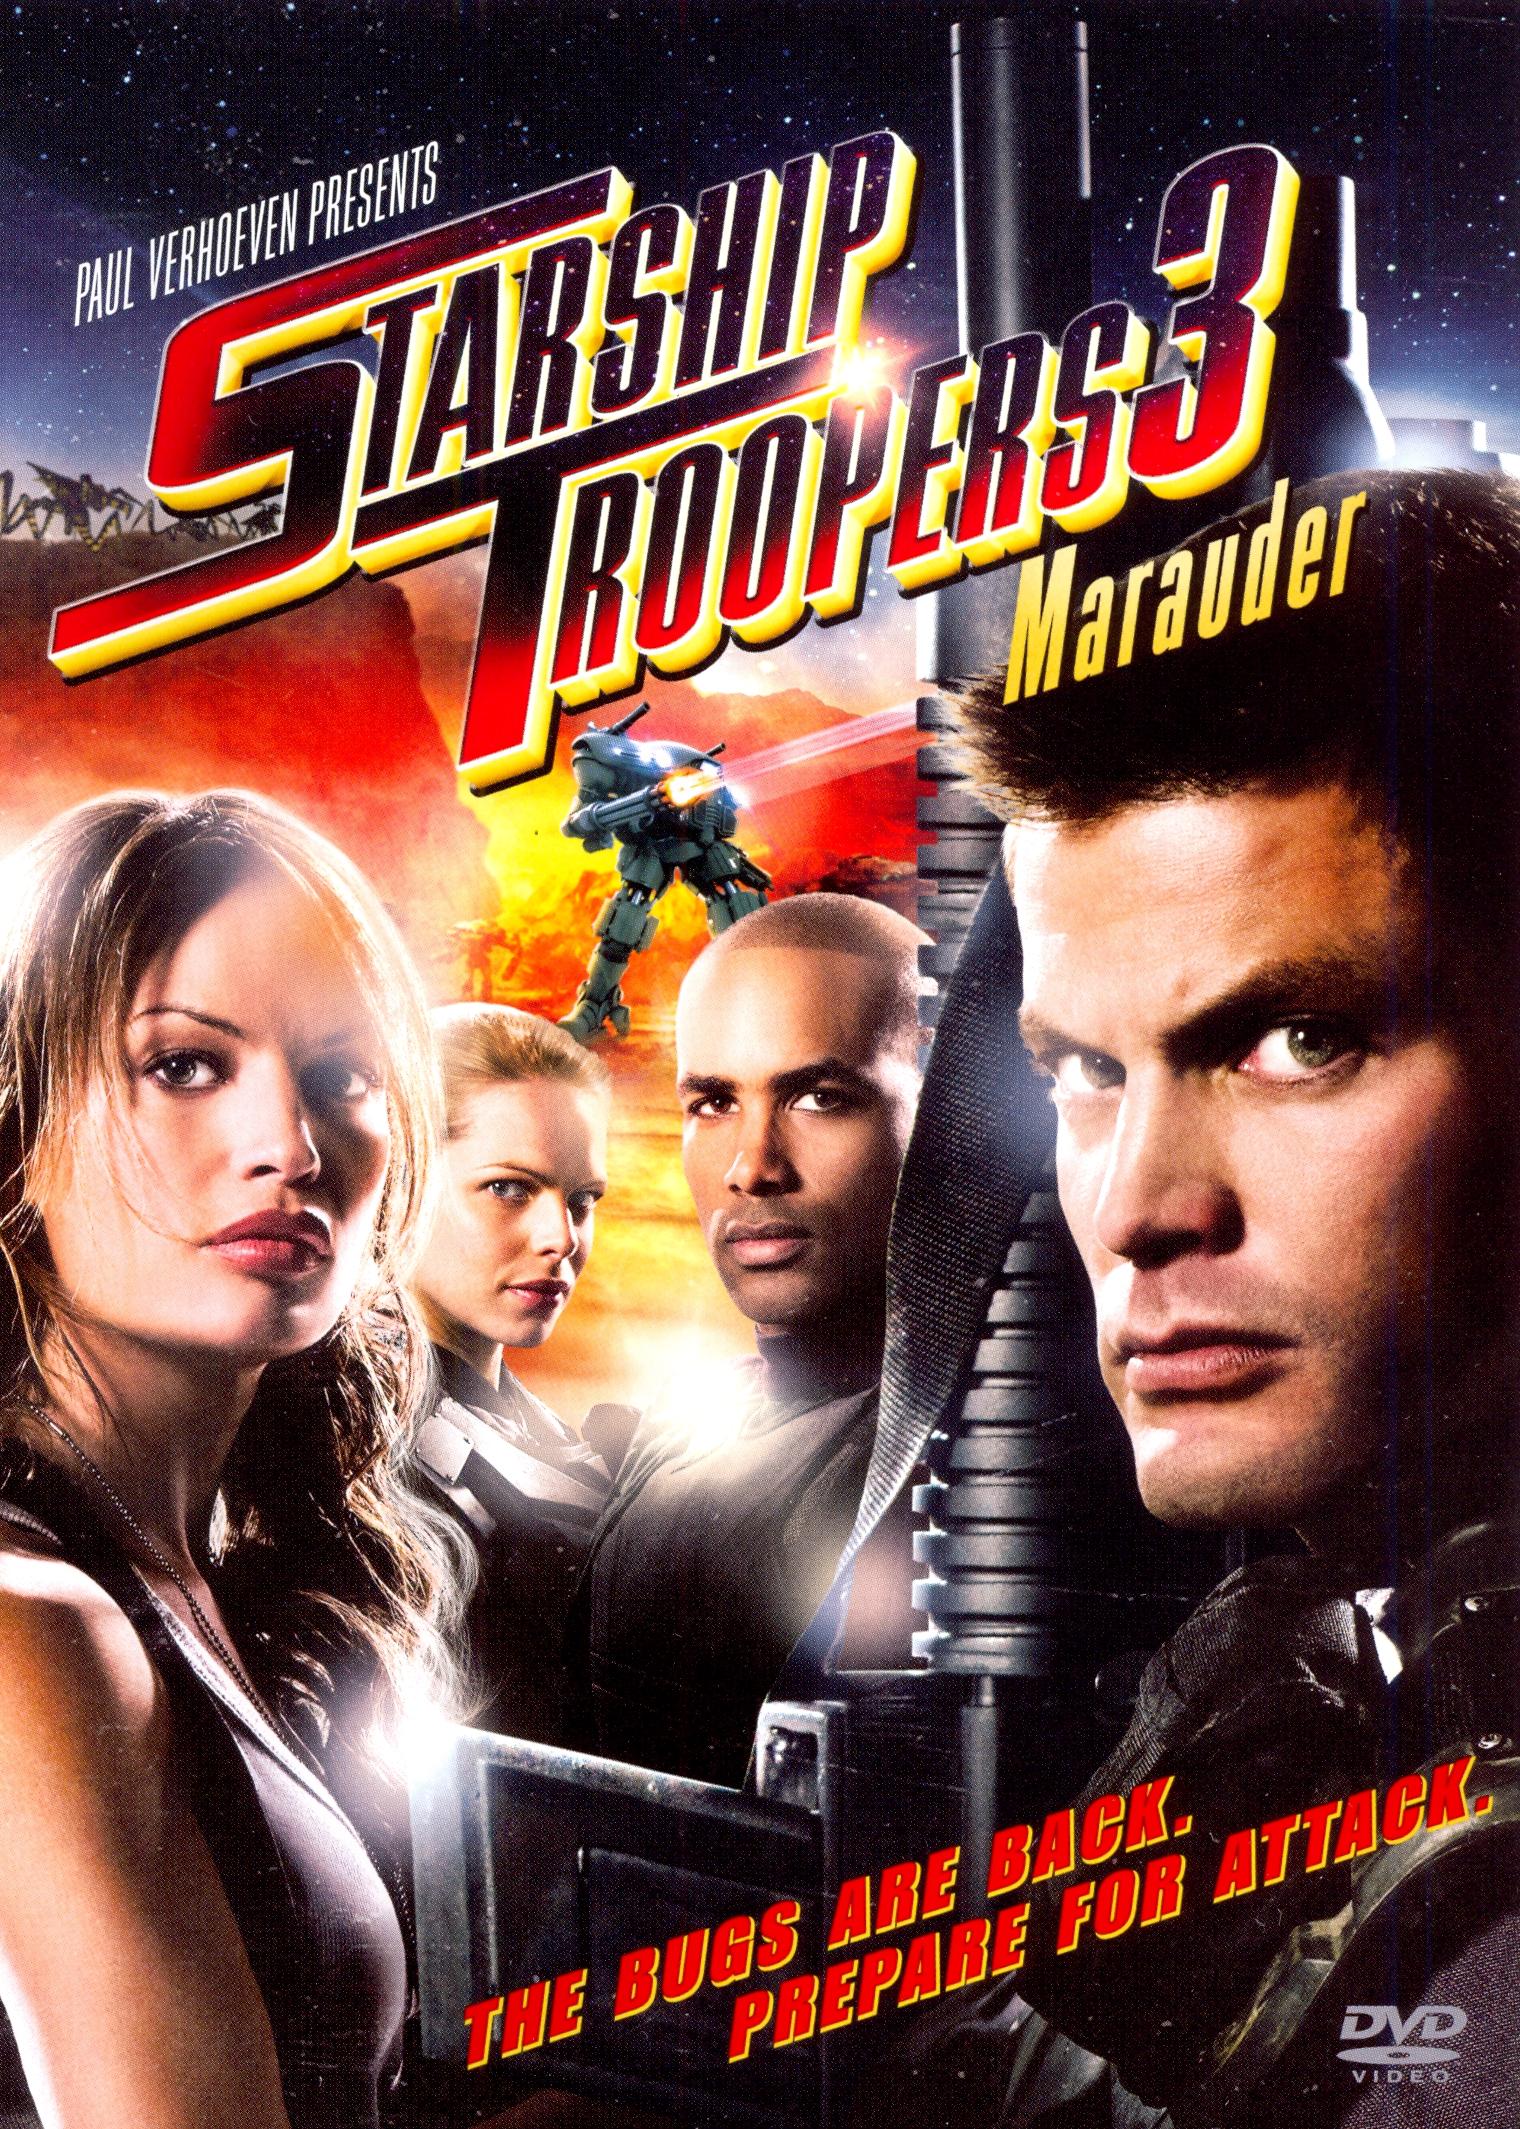 Starship Troopers 3: Marauder cover art